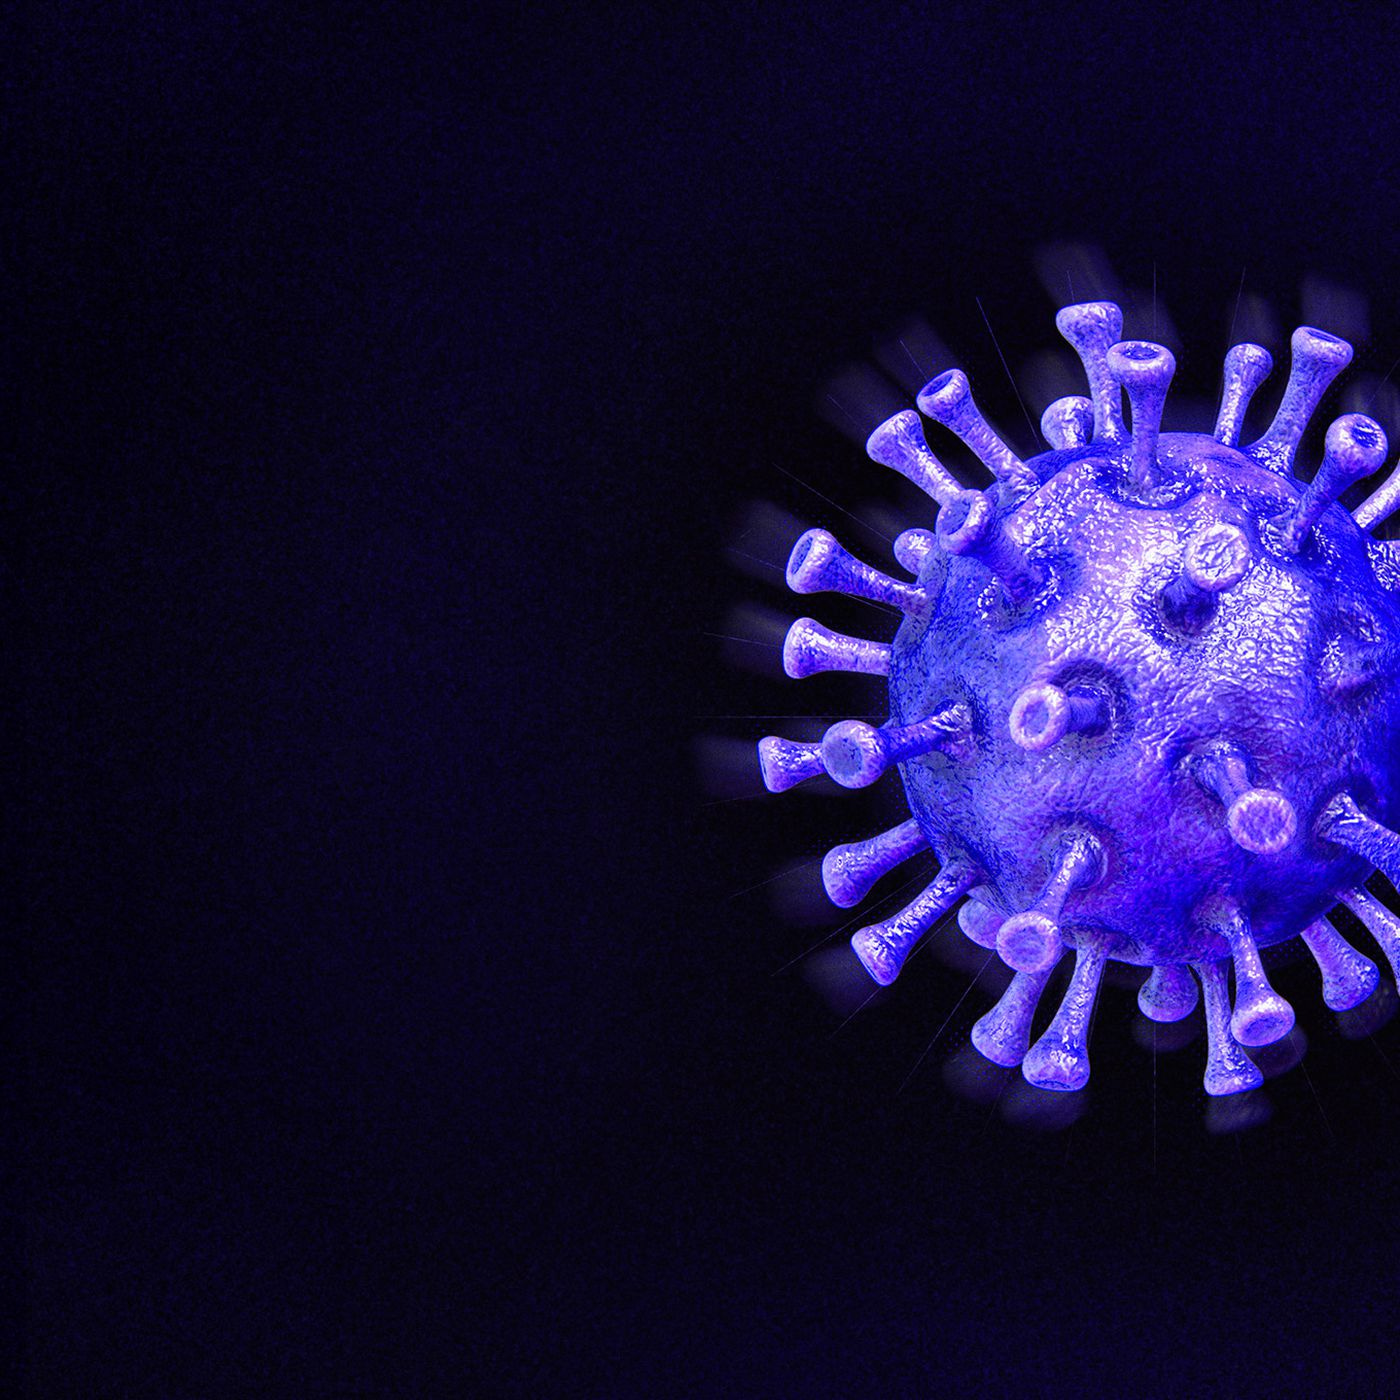 Image result for coronavirus response